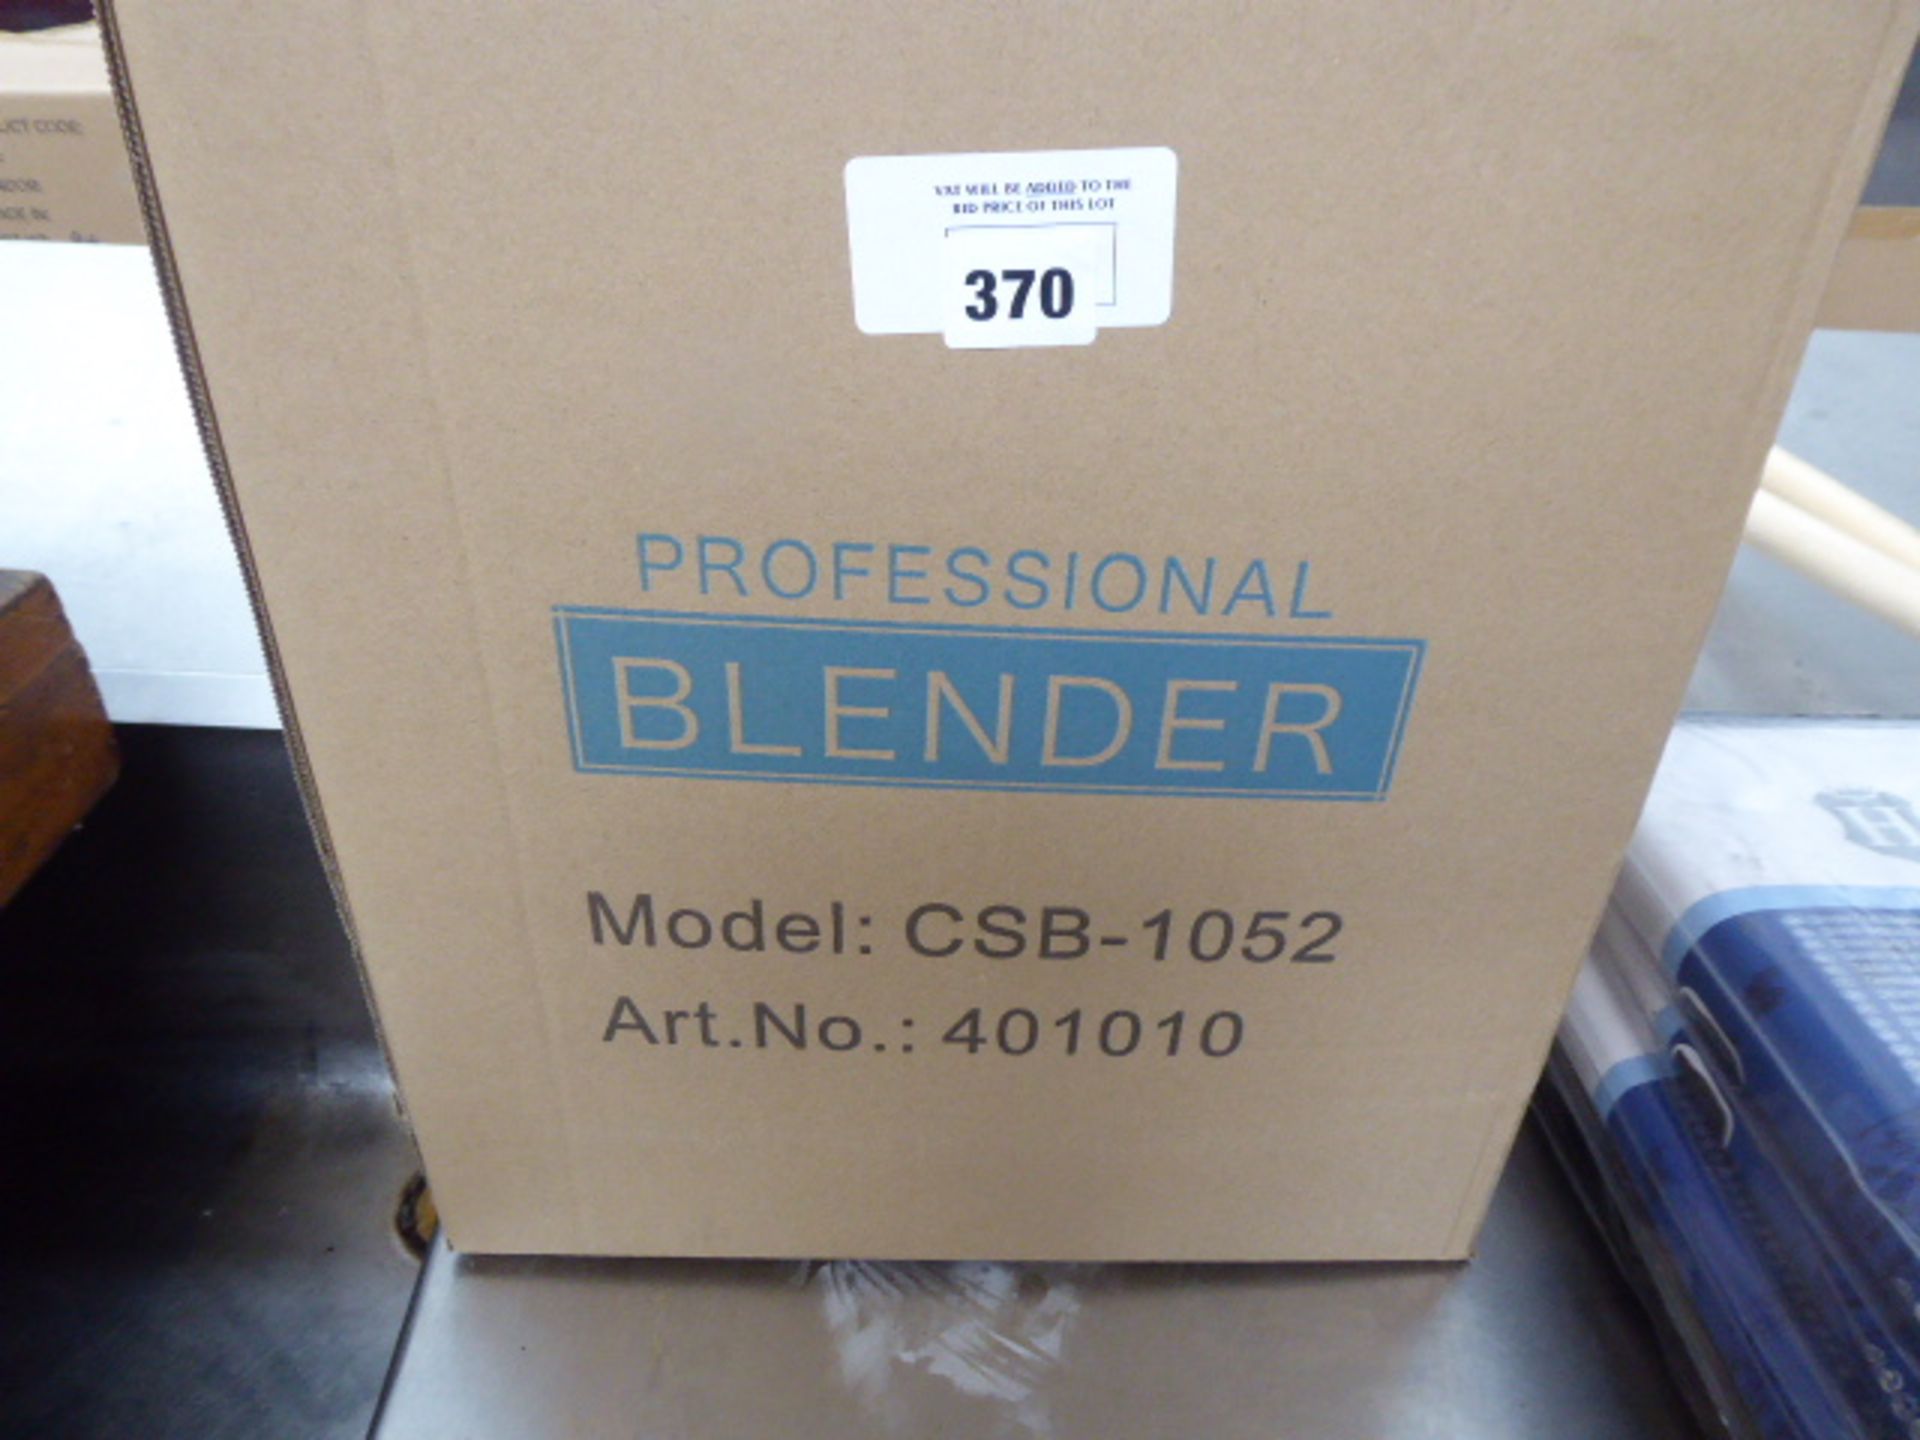 Heavy duty professional blender model 1052 - Image 2 of 2